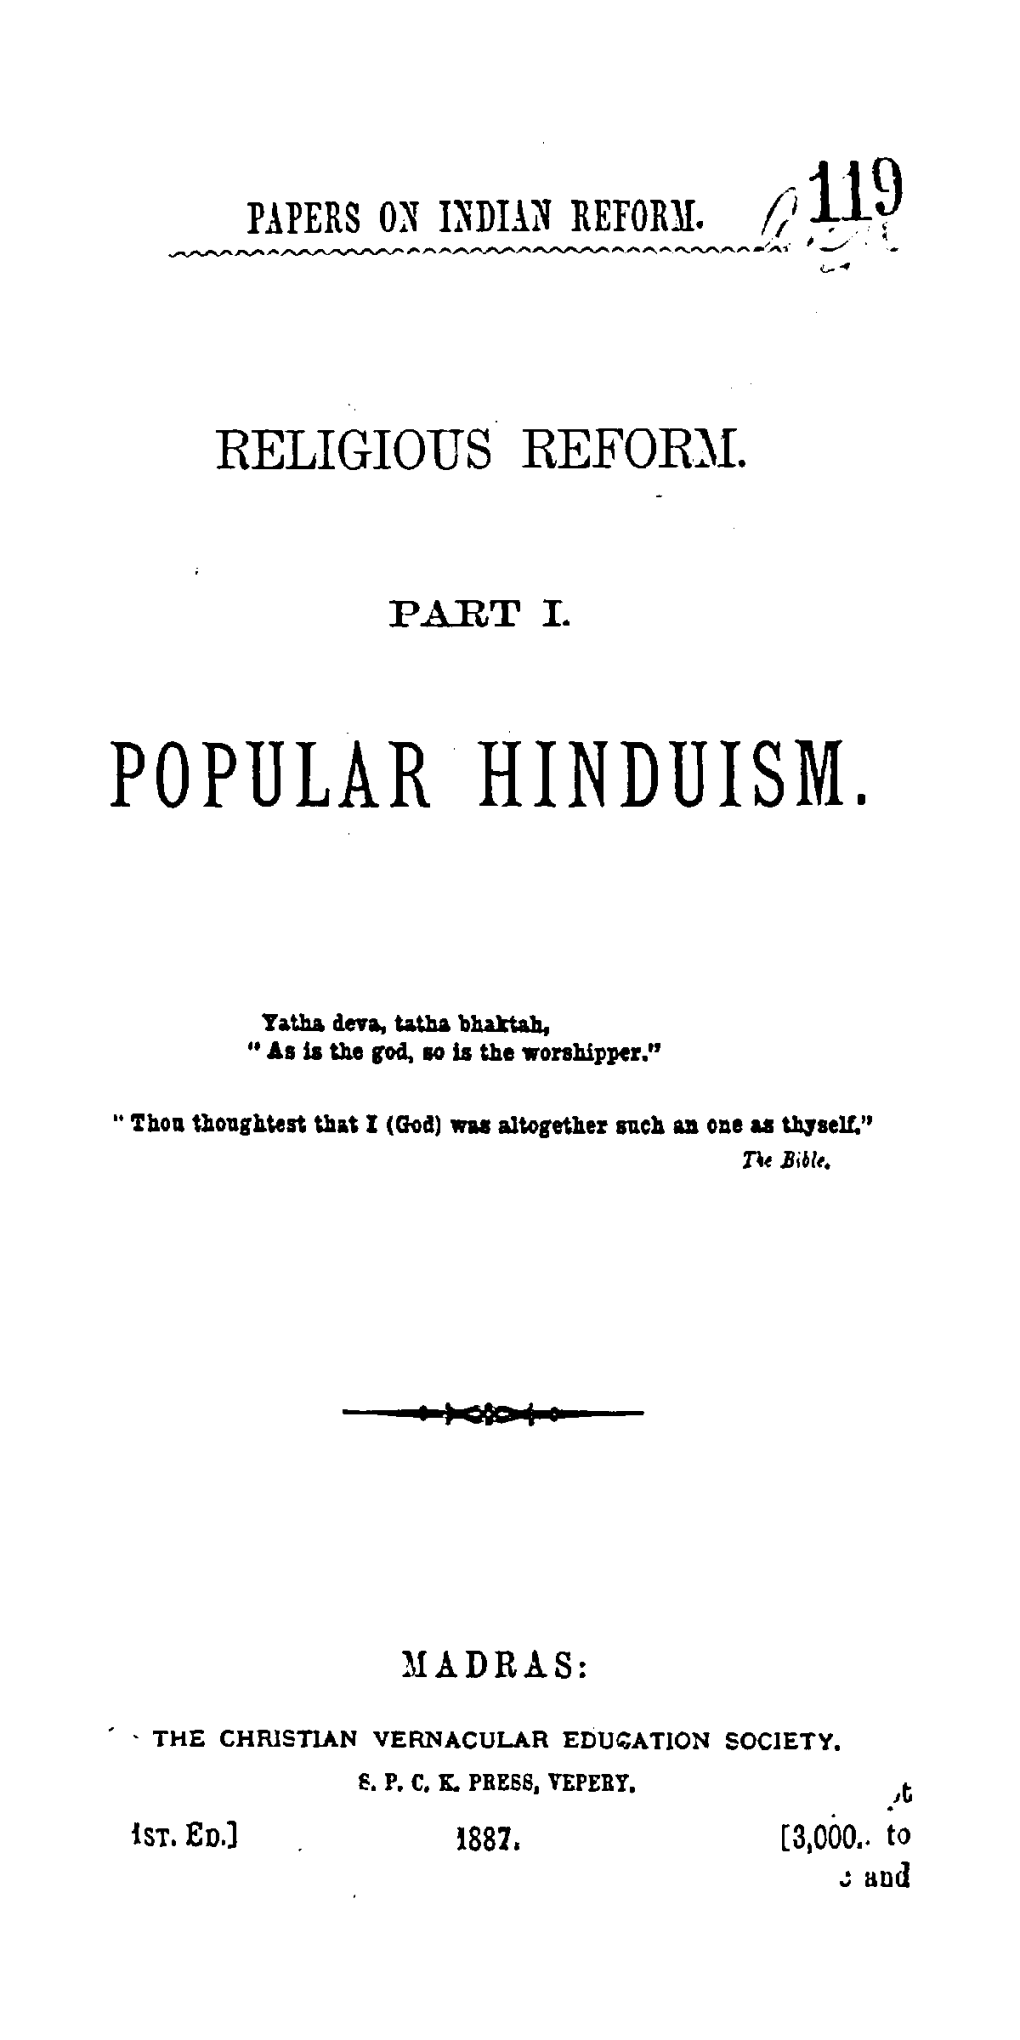 Popular Hinduism